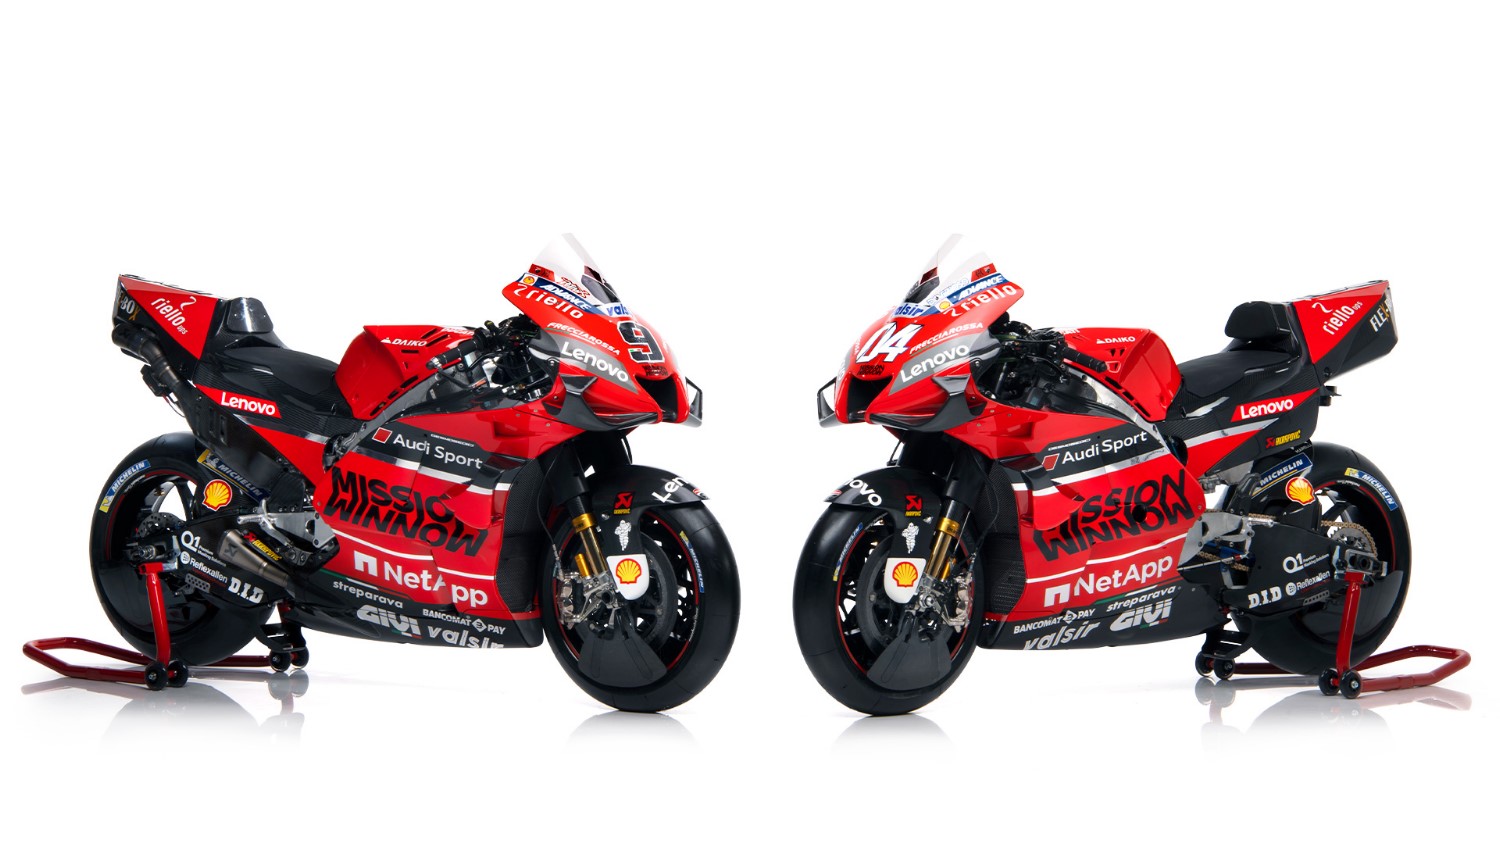 2020 Ducati colors and bikes